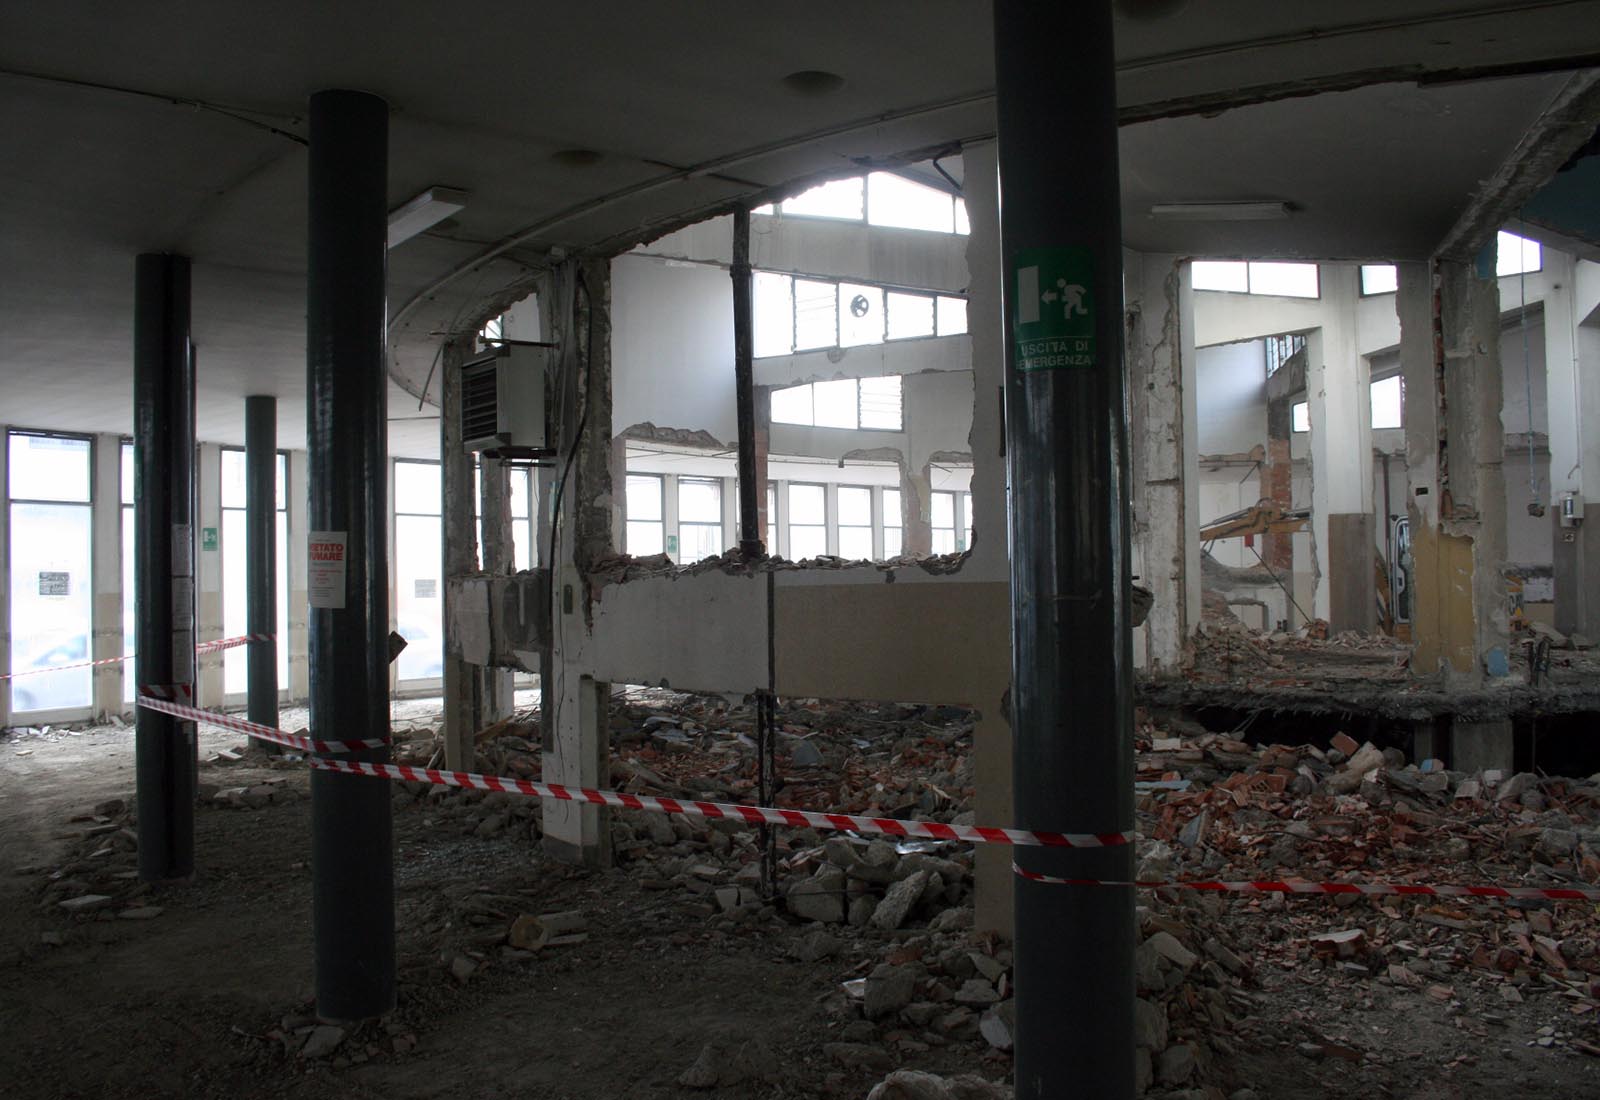 Manzoni school center in Milan - Demolition of structures